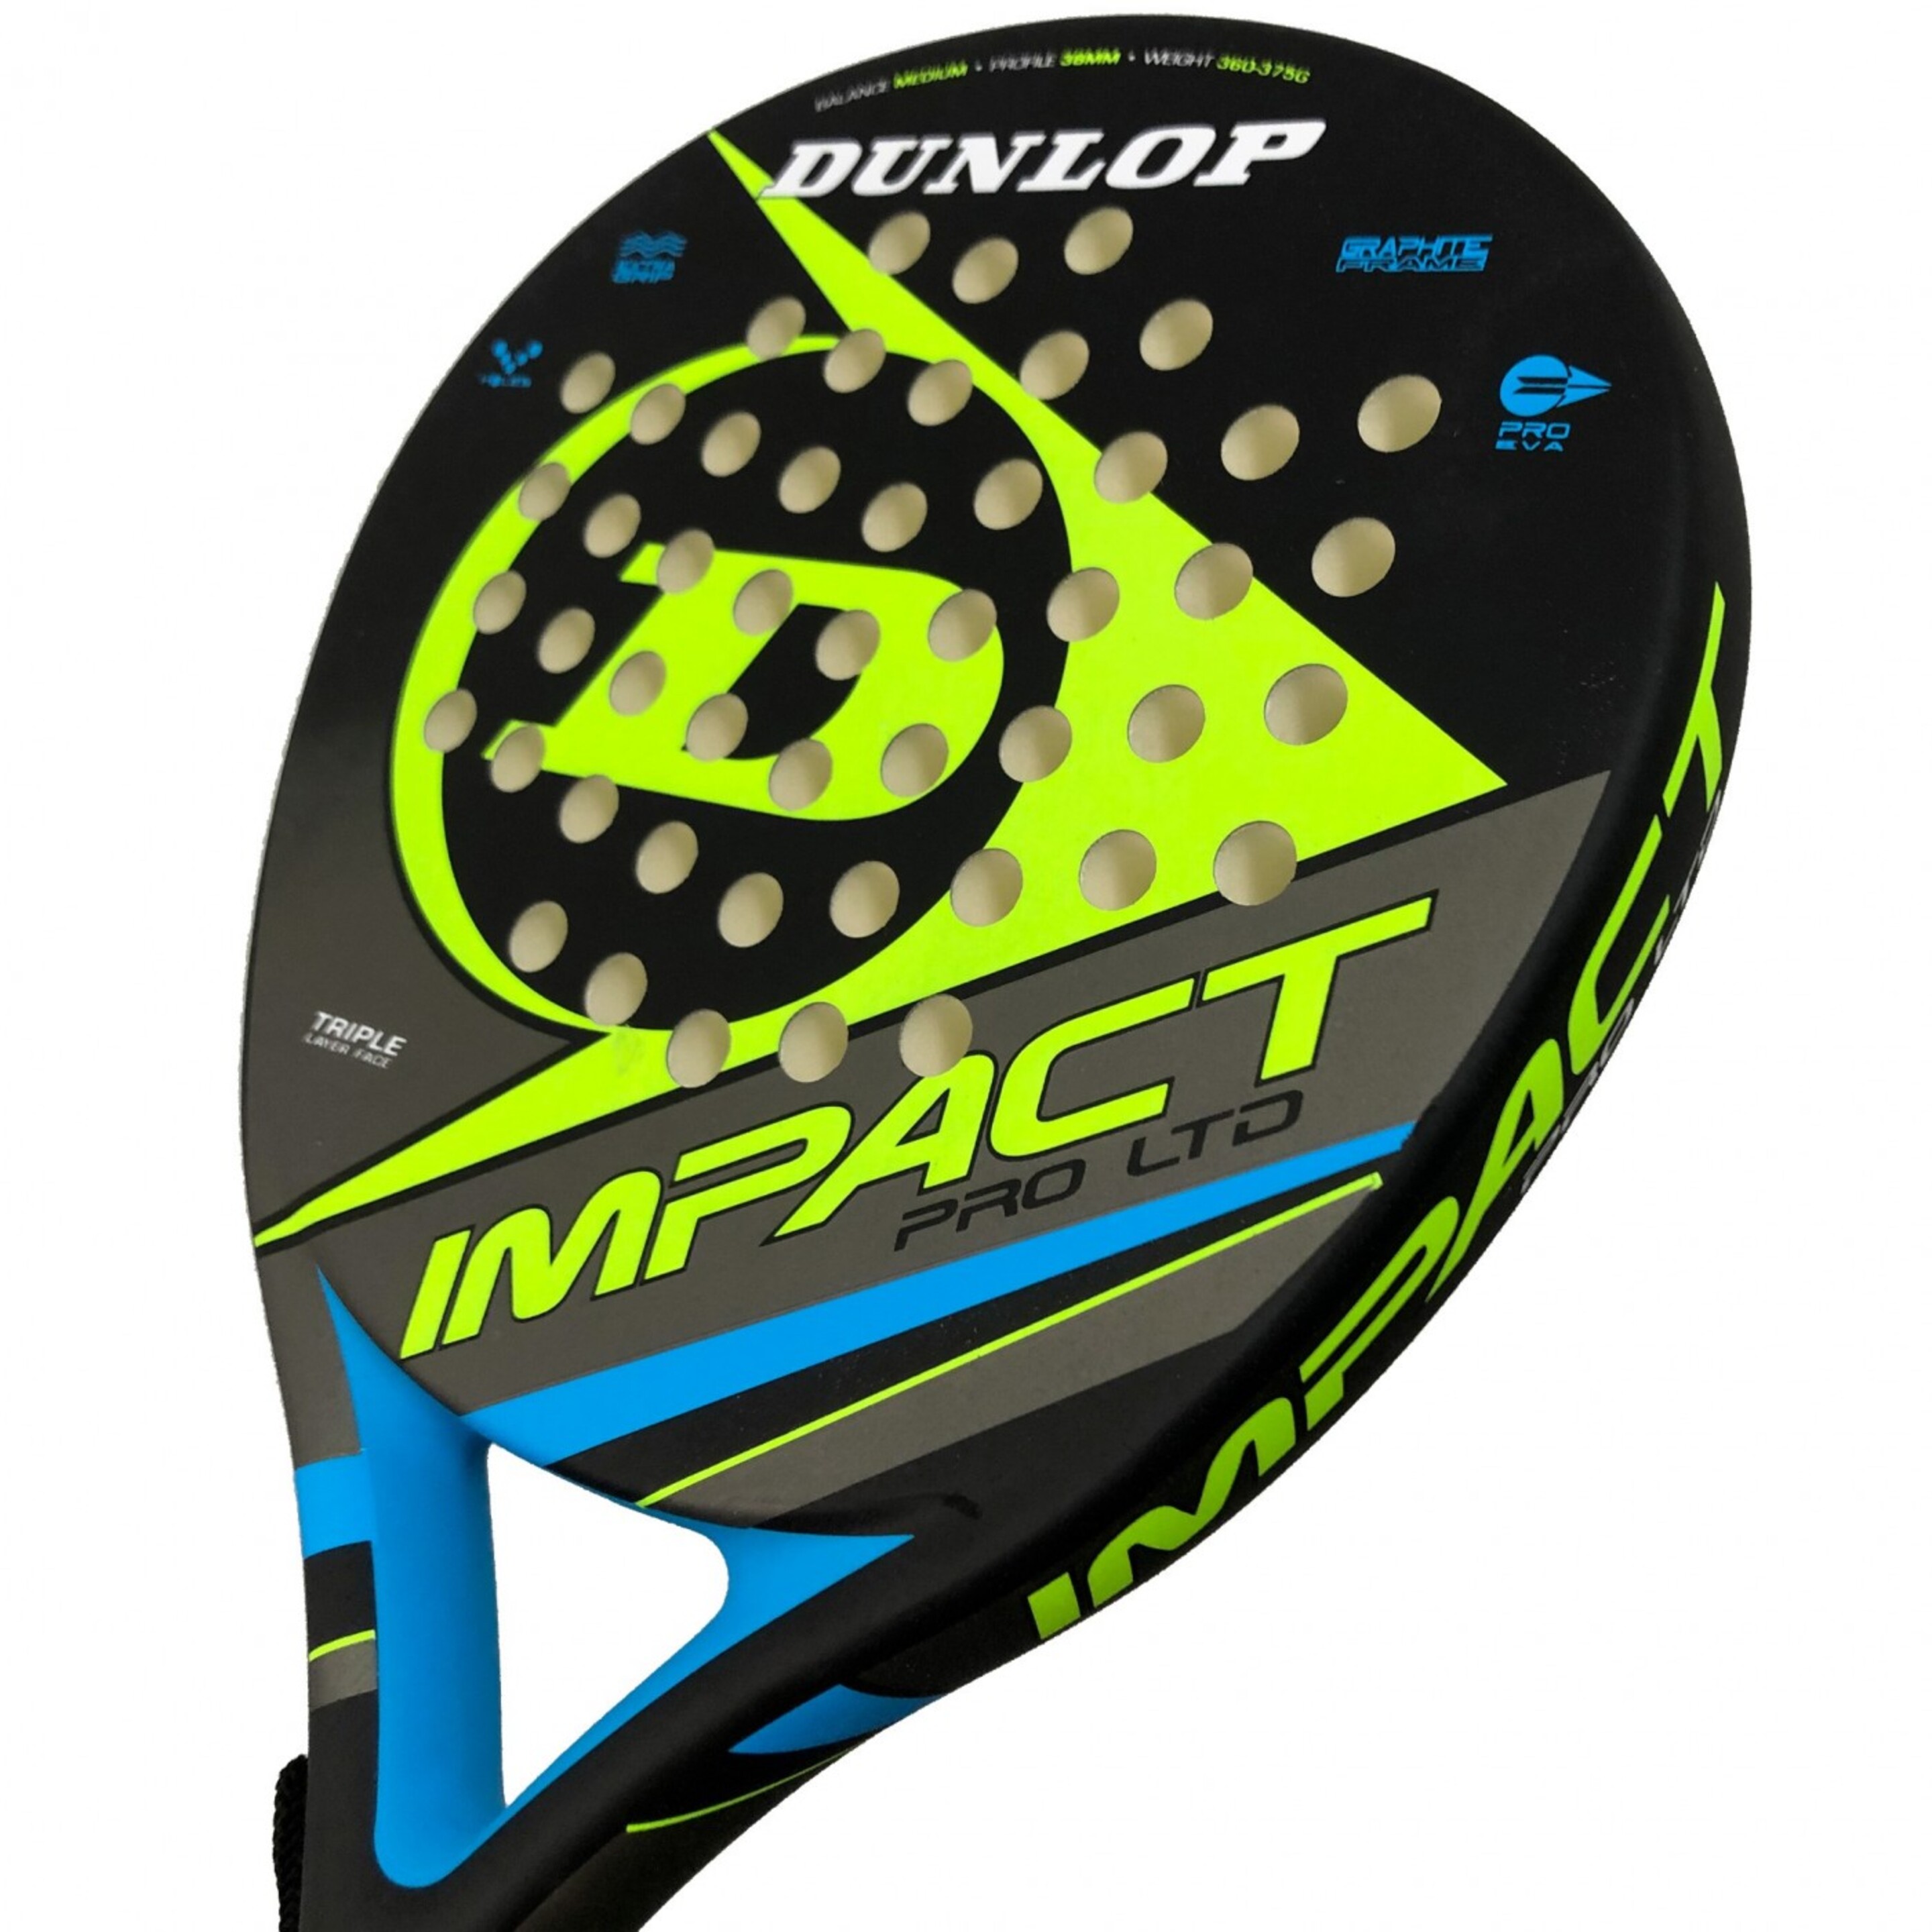 Pala De Pádel Dunlop Impact X-treme Pro Ltd